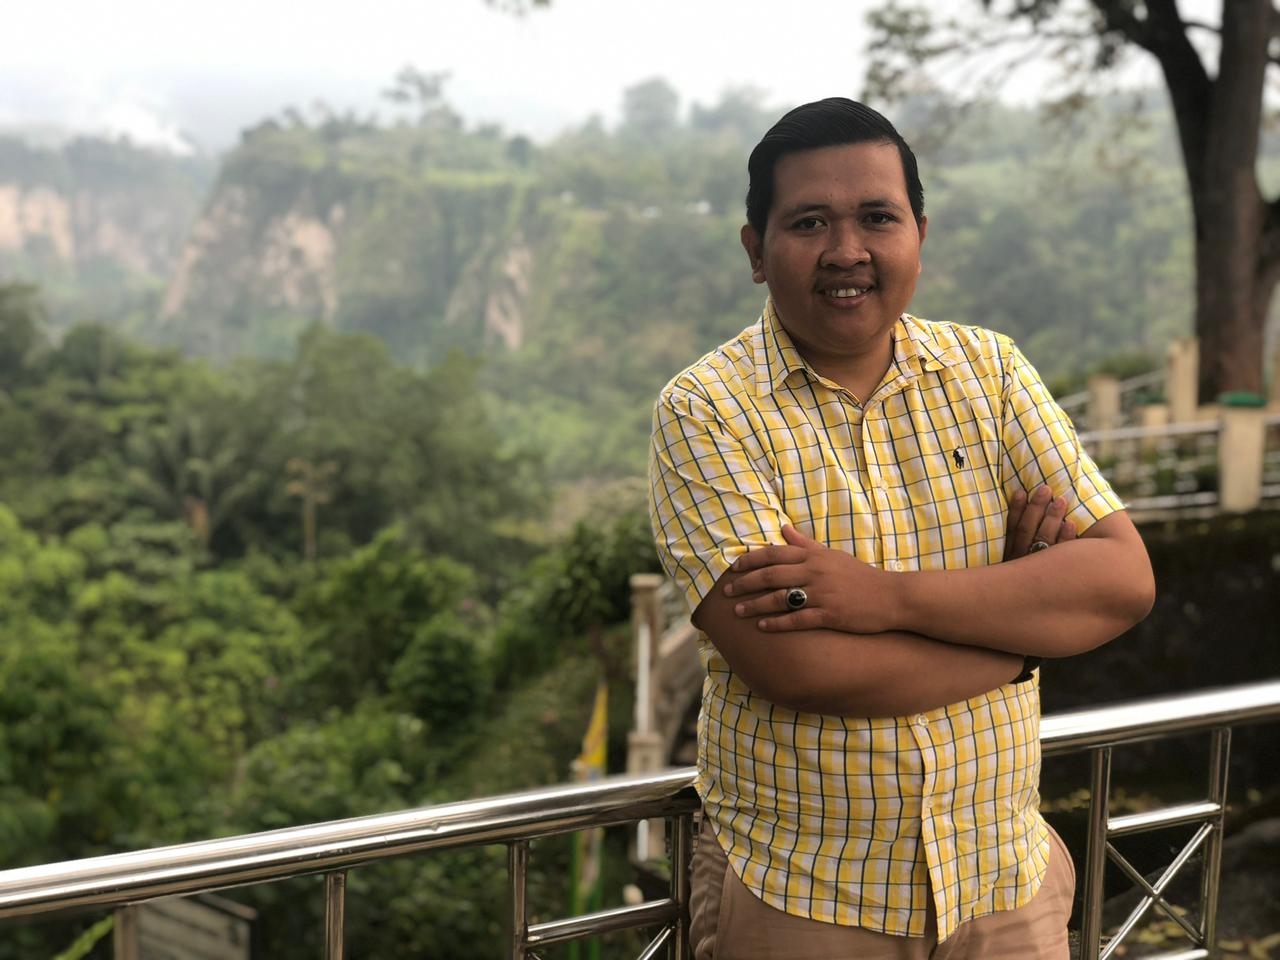 Selekda Usai, Ini 7 Tim Terbaik Wakili ESI Kuansing Ikuti Seleksi Tingkat Provinsi Riau